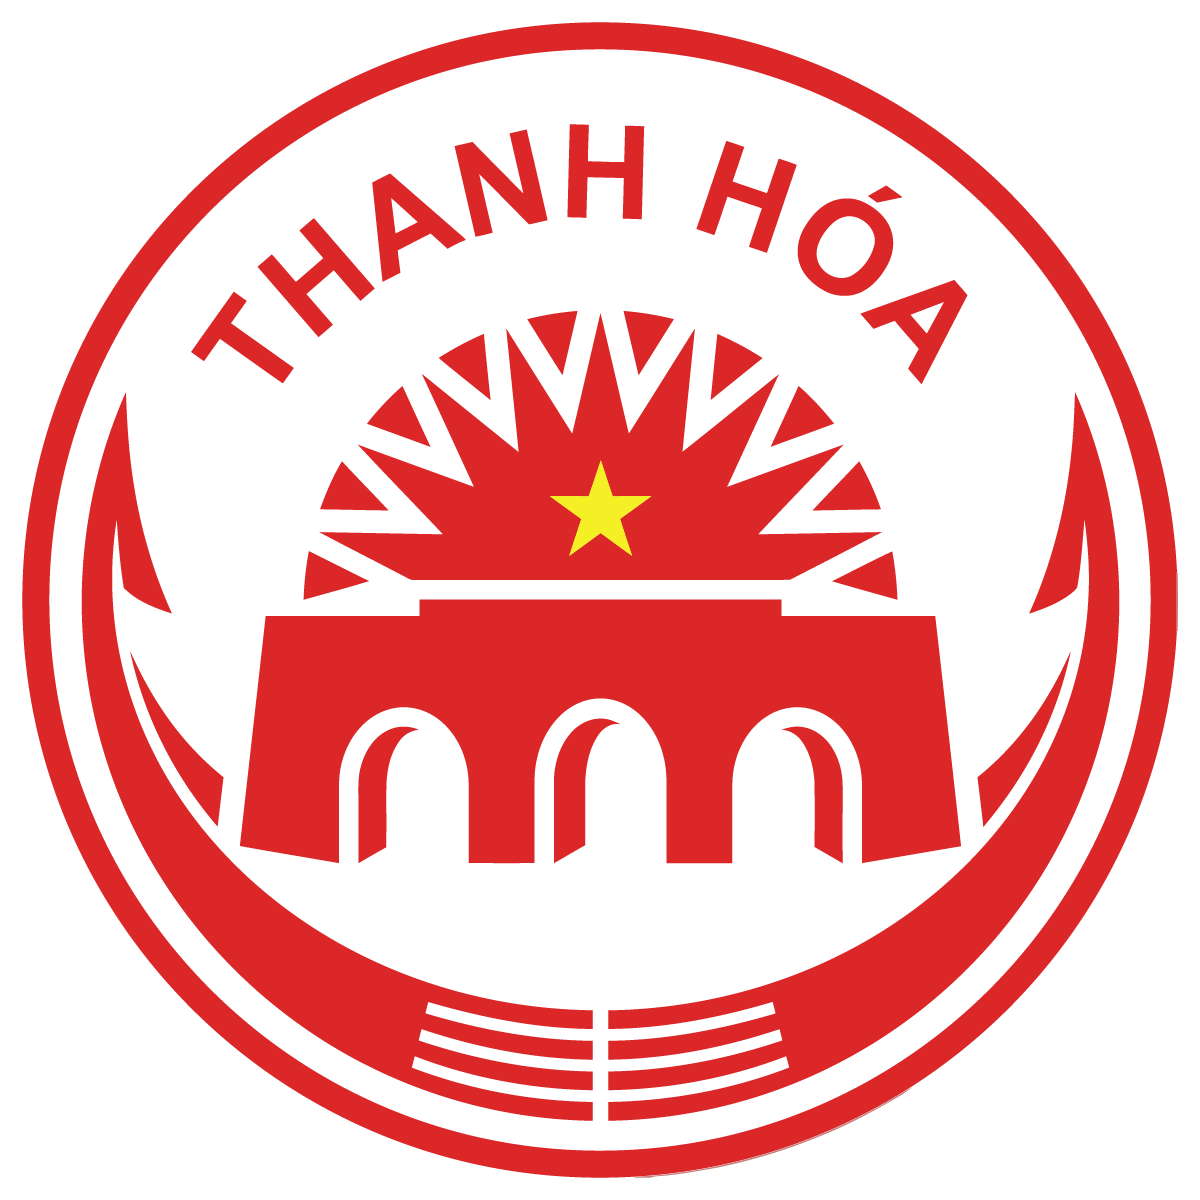 Logo Tinh Thanh Hoa